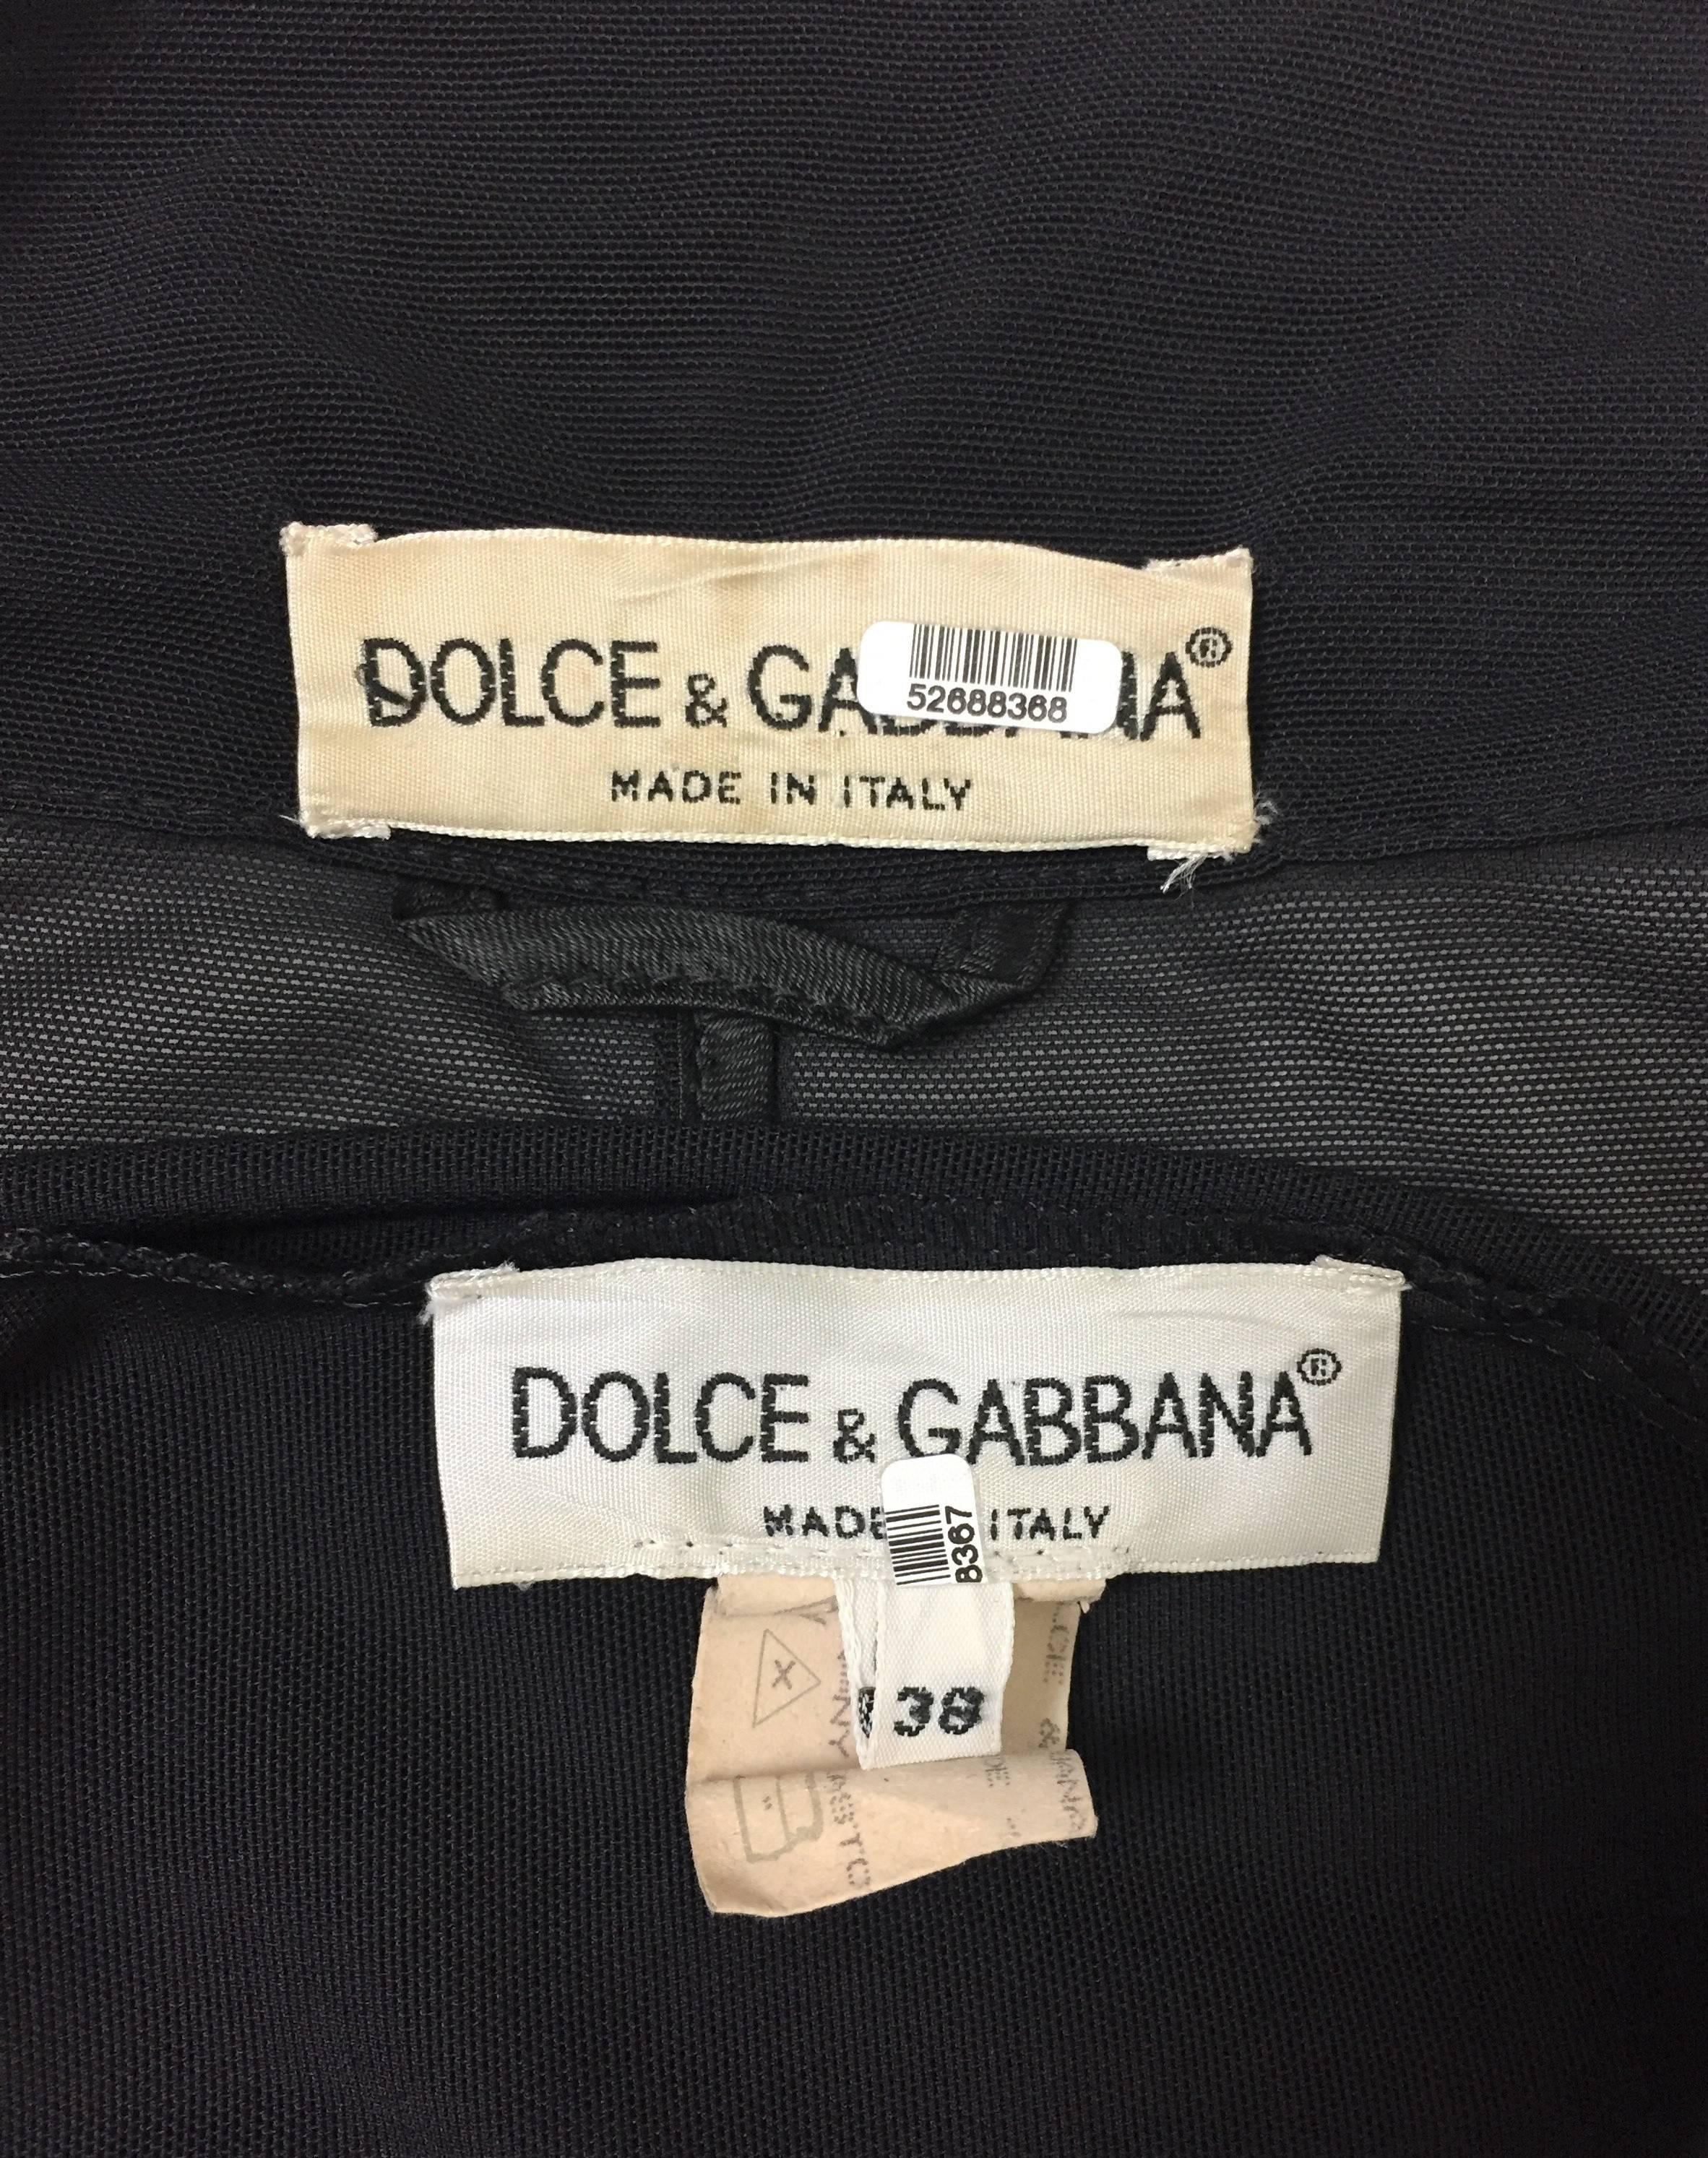 Women's S/S 1995 Dolce & Gabbana Pin-Up Sheer Black Mesh Jacket Long Skirt & Mini Set